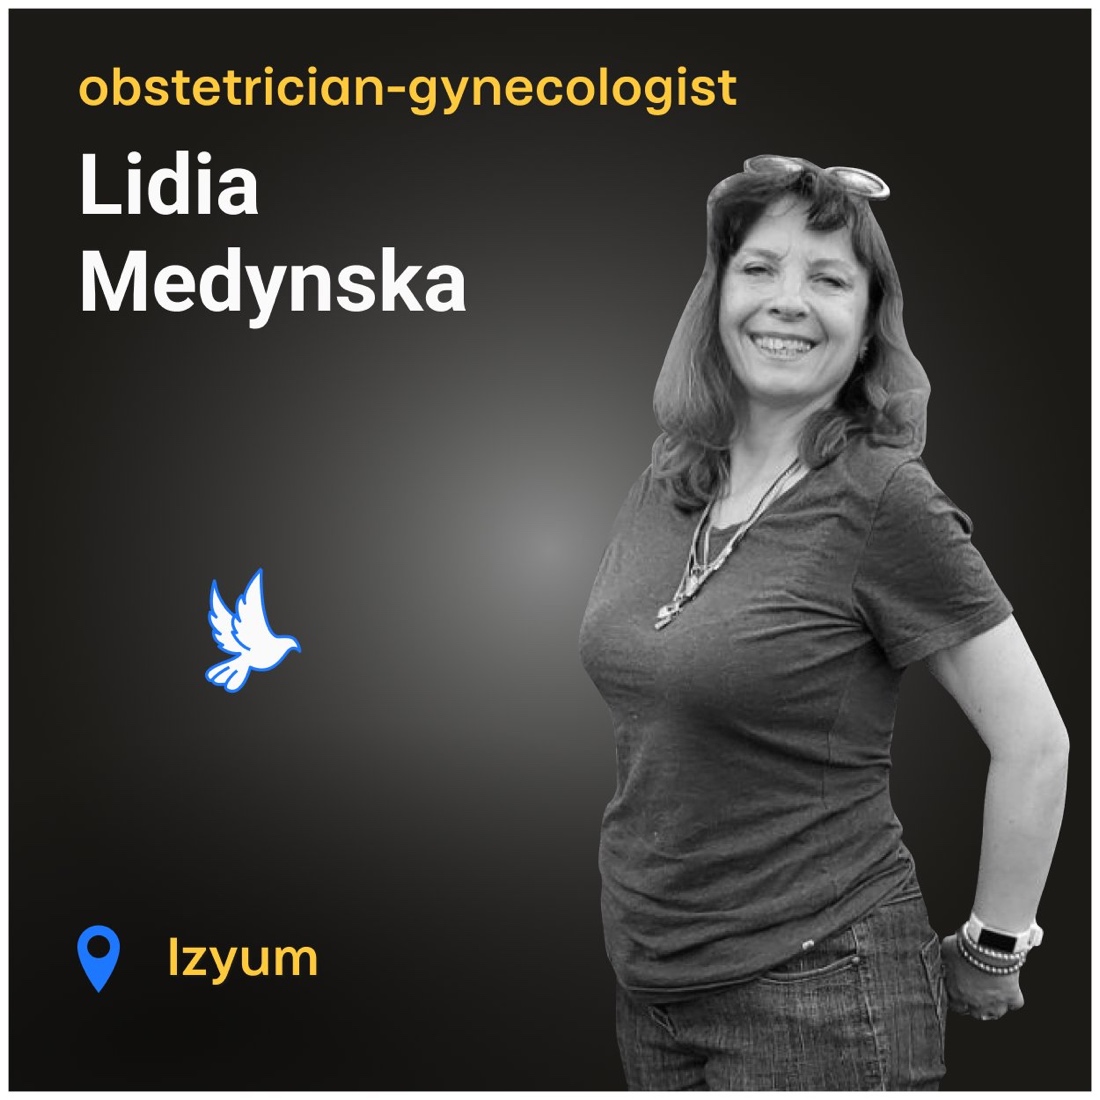 Advertisement for Lidia Medynska, obstetrician-gynecologist